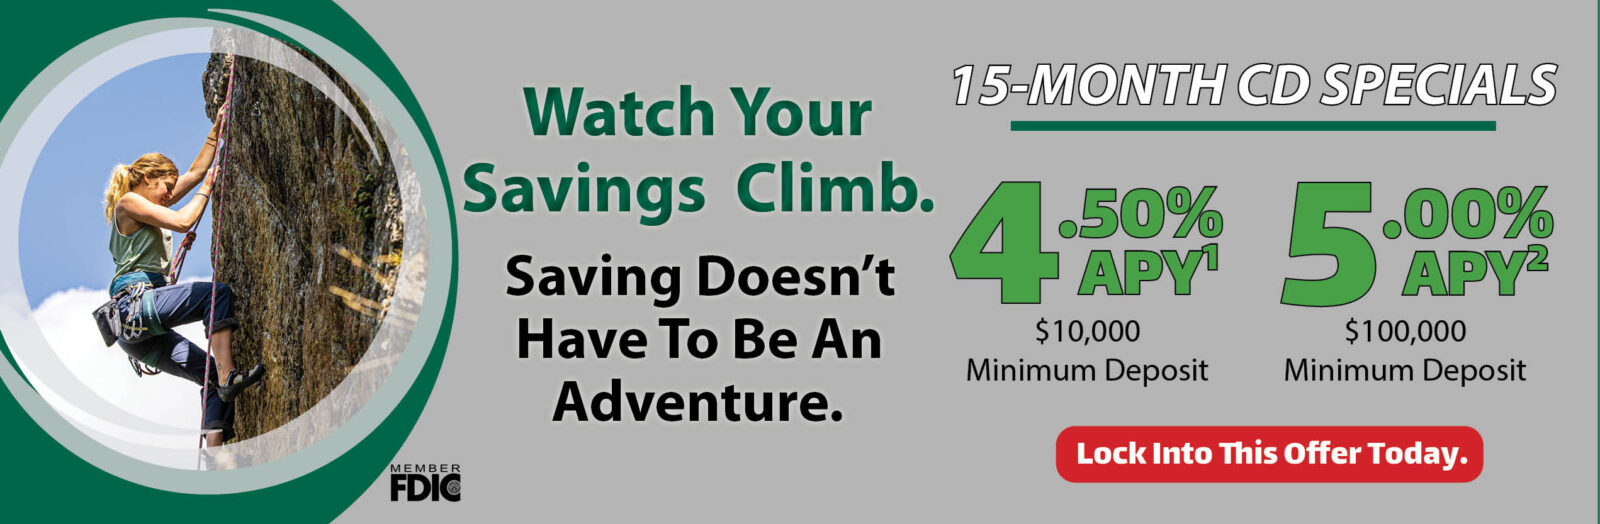 15-Month Special CD. Watch Your Savings Climb banner. Woman climbing mountain face